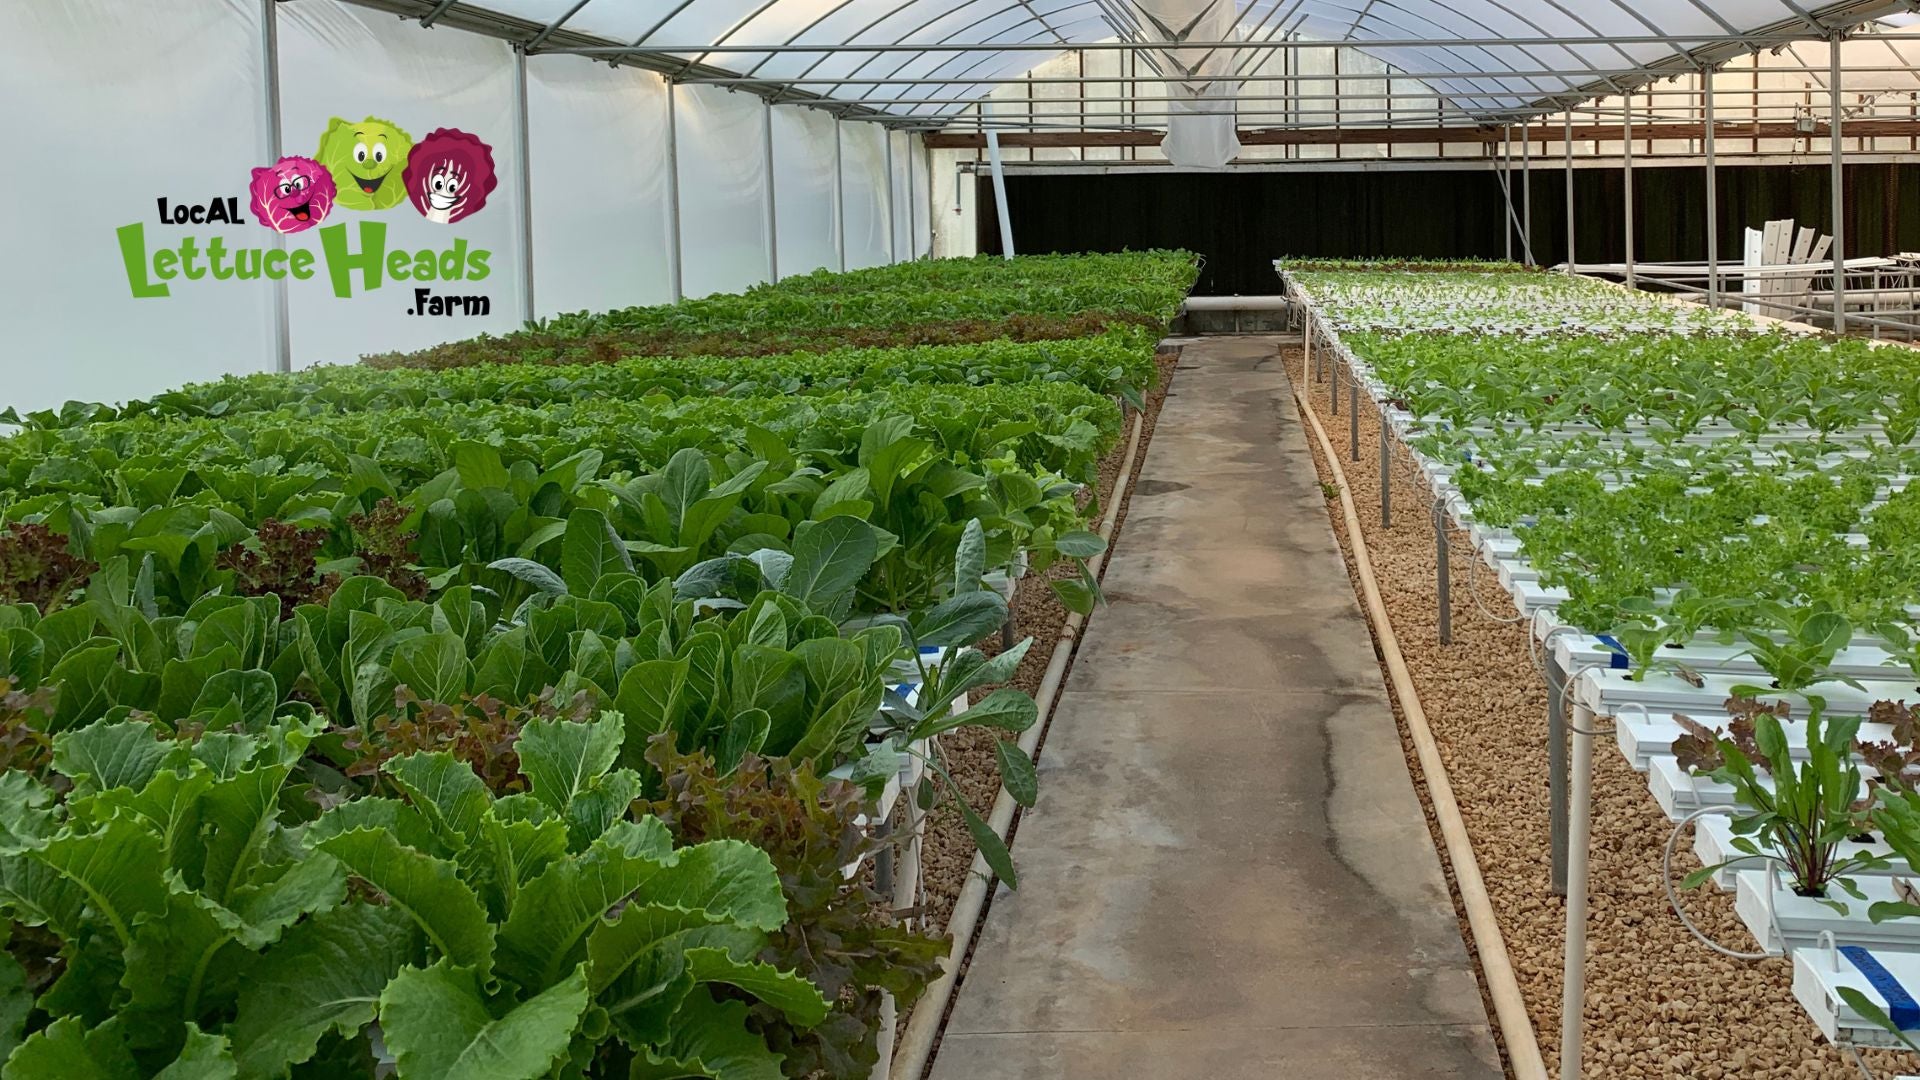 LocAL Lettuce Heads .Farm hydroponic lettuce heads